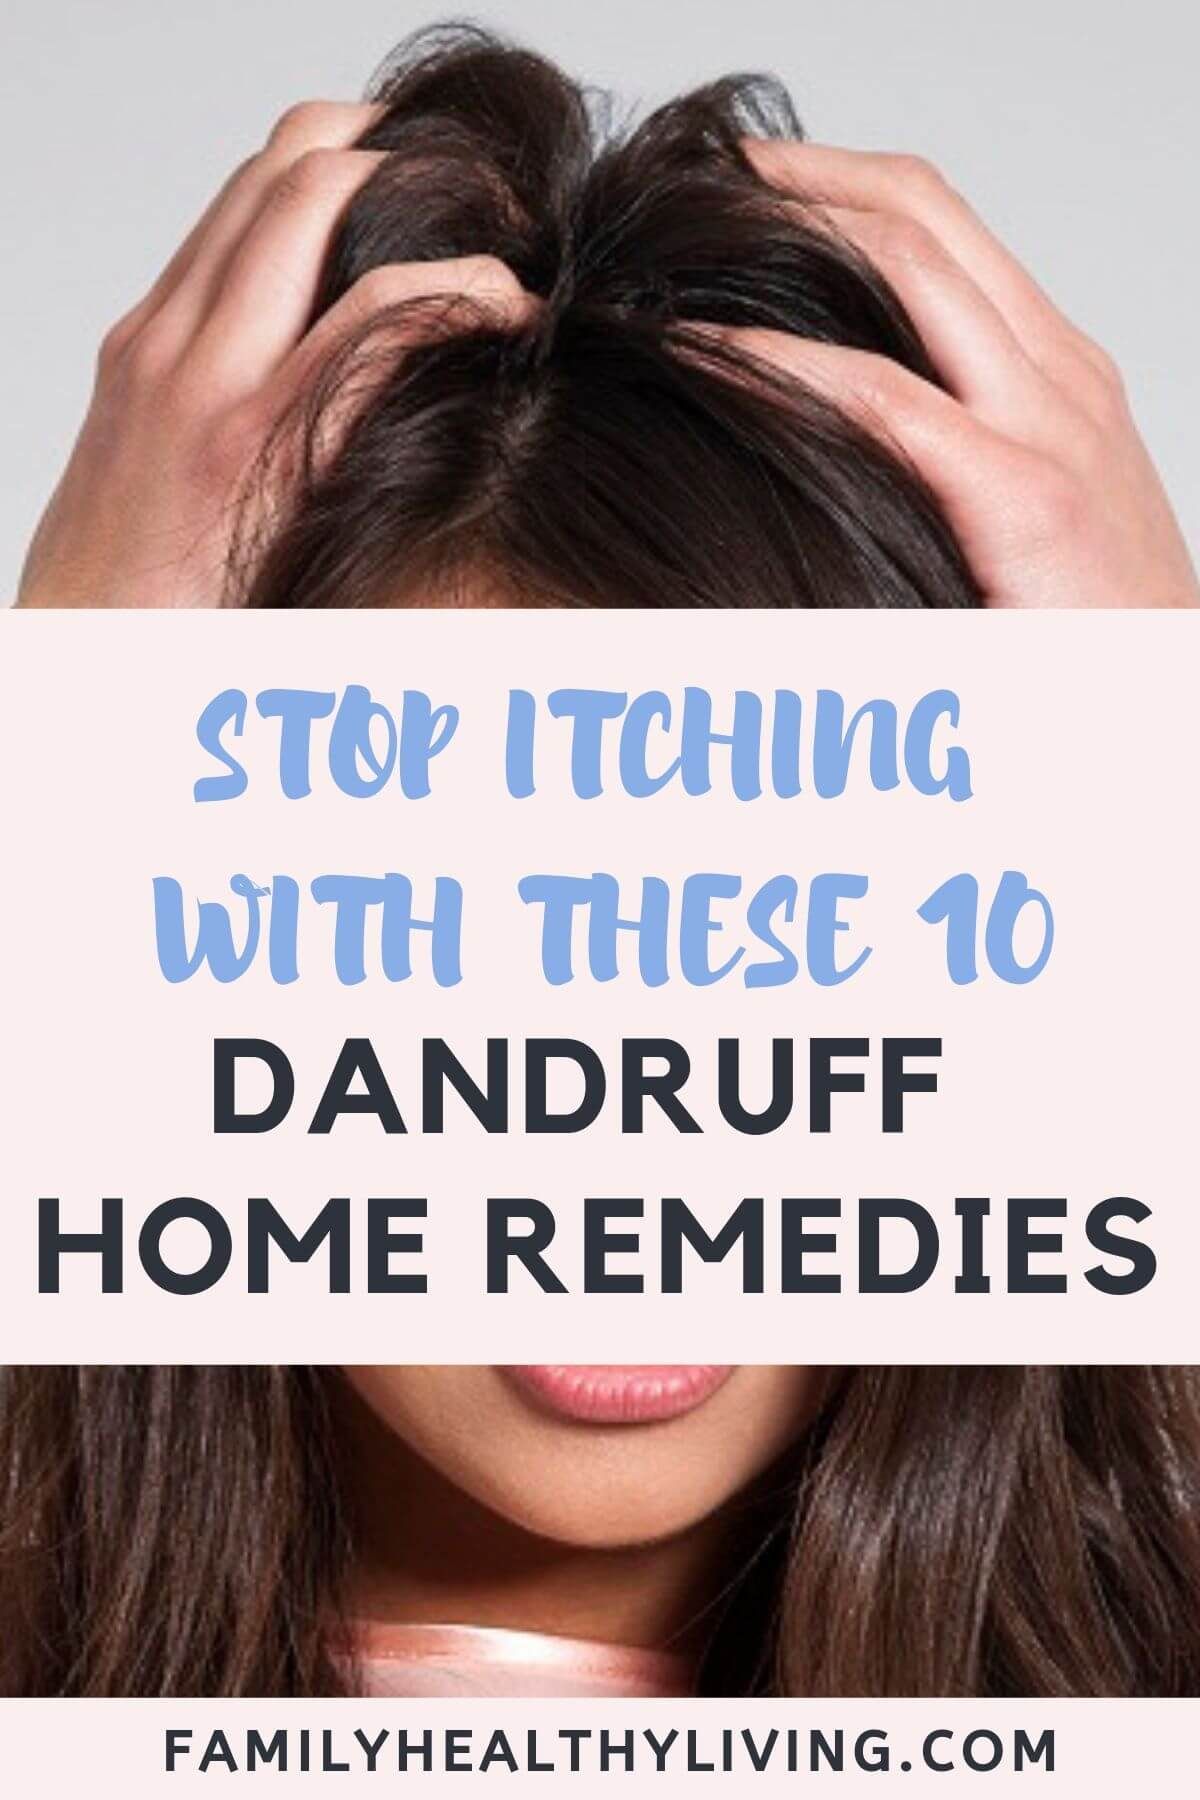 10 Dandruff Home Remedies | Natural Home Remedies For Dandruff -   14 hair Treatment for dandruff ideas